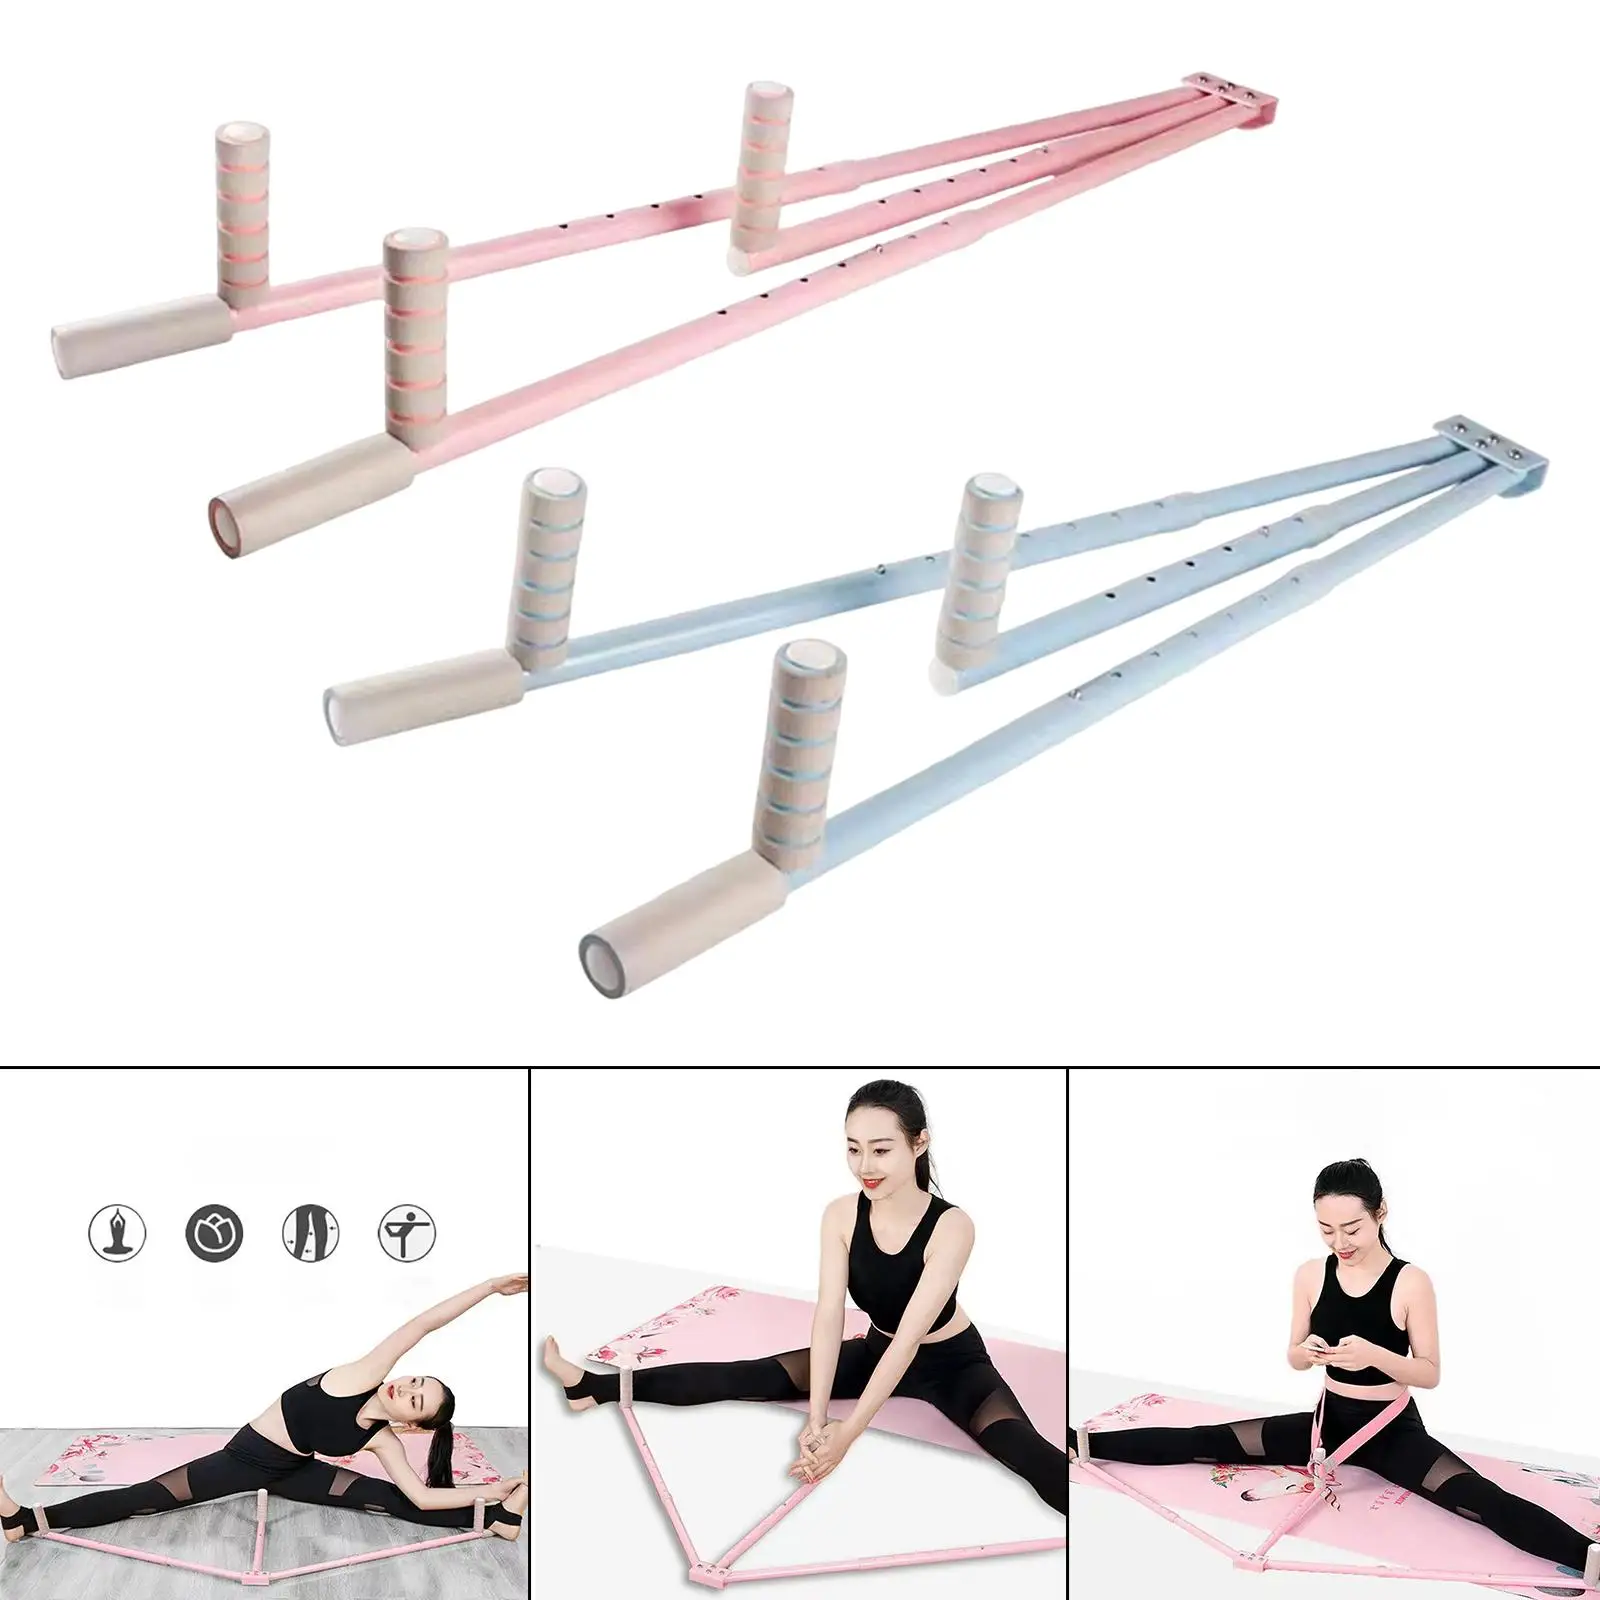 Leg Stretcher Home Exercise Adjustable Comfortable Bar Leg Split Stretching Machine for Gymnastics Training Dance Yoga Sports